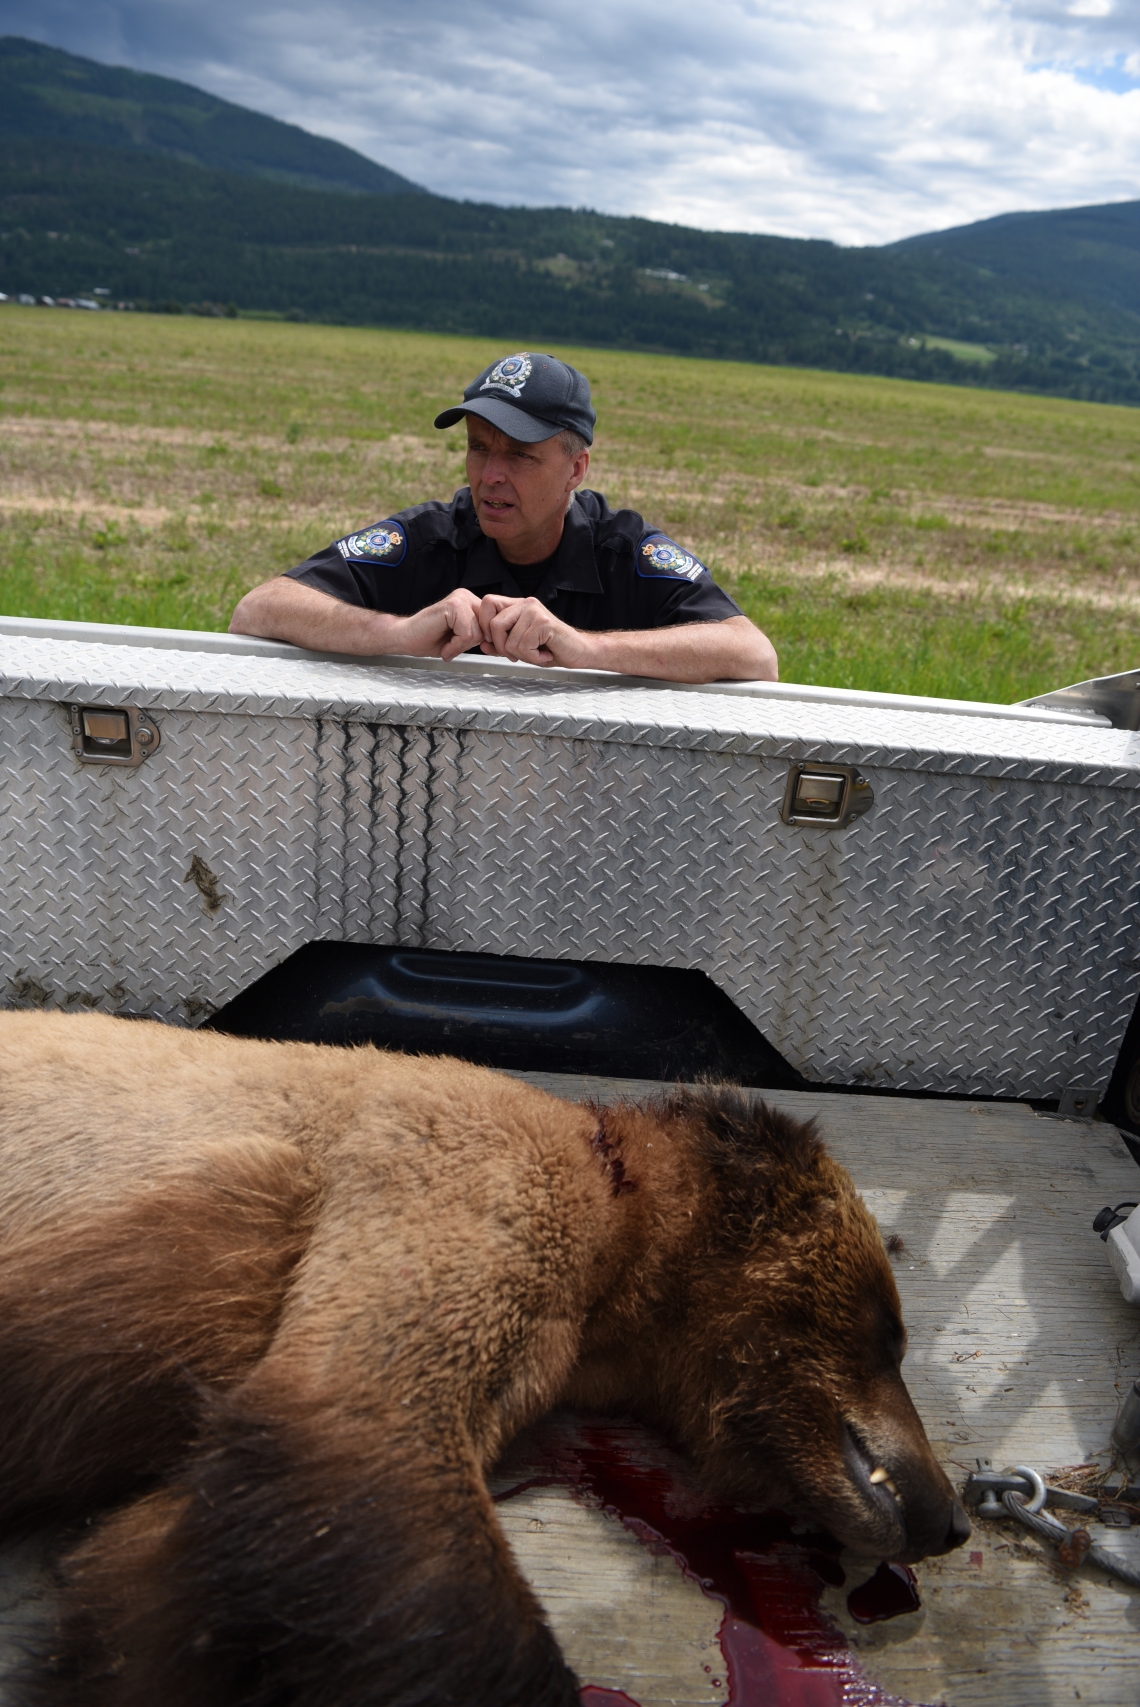 Brown bear_U arctos_British Columbia Canada_bear shot and killed by landowner defending livestock_M Proctor